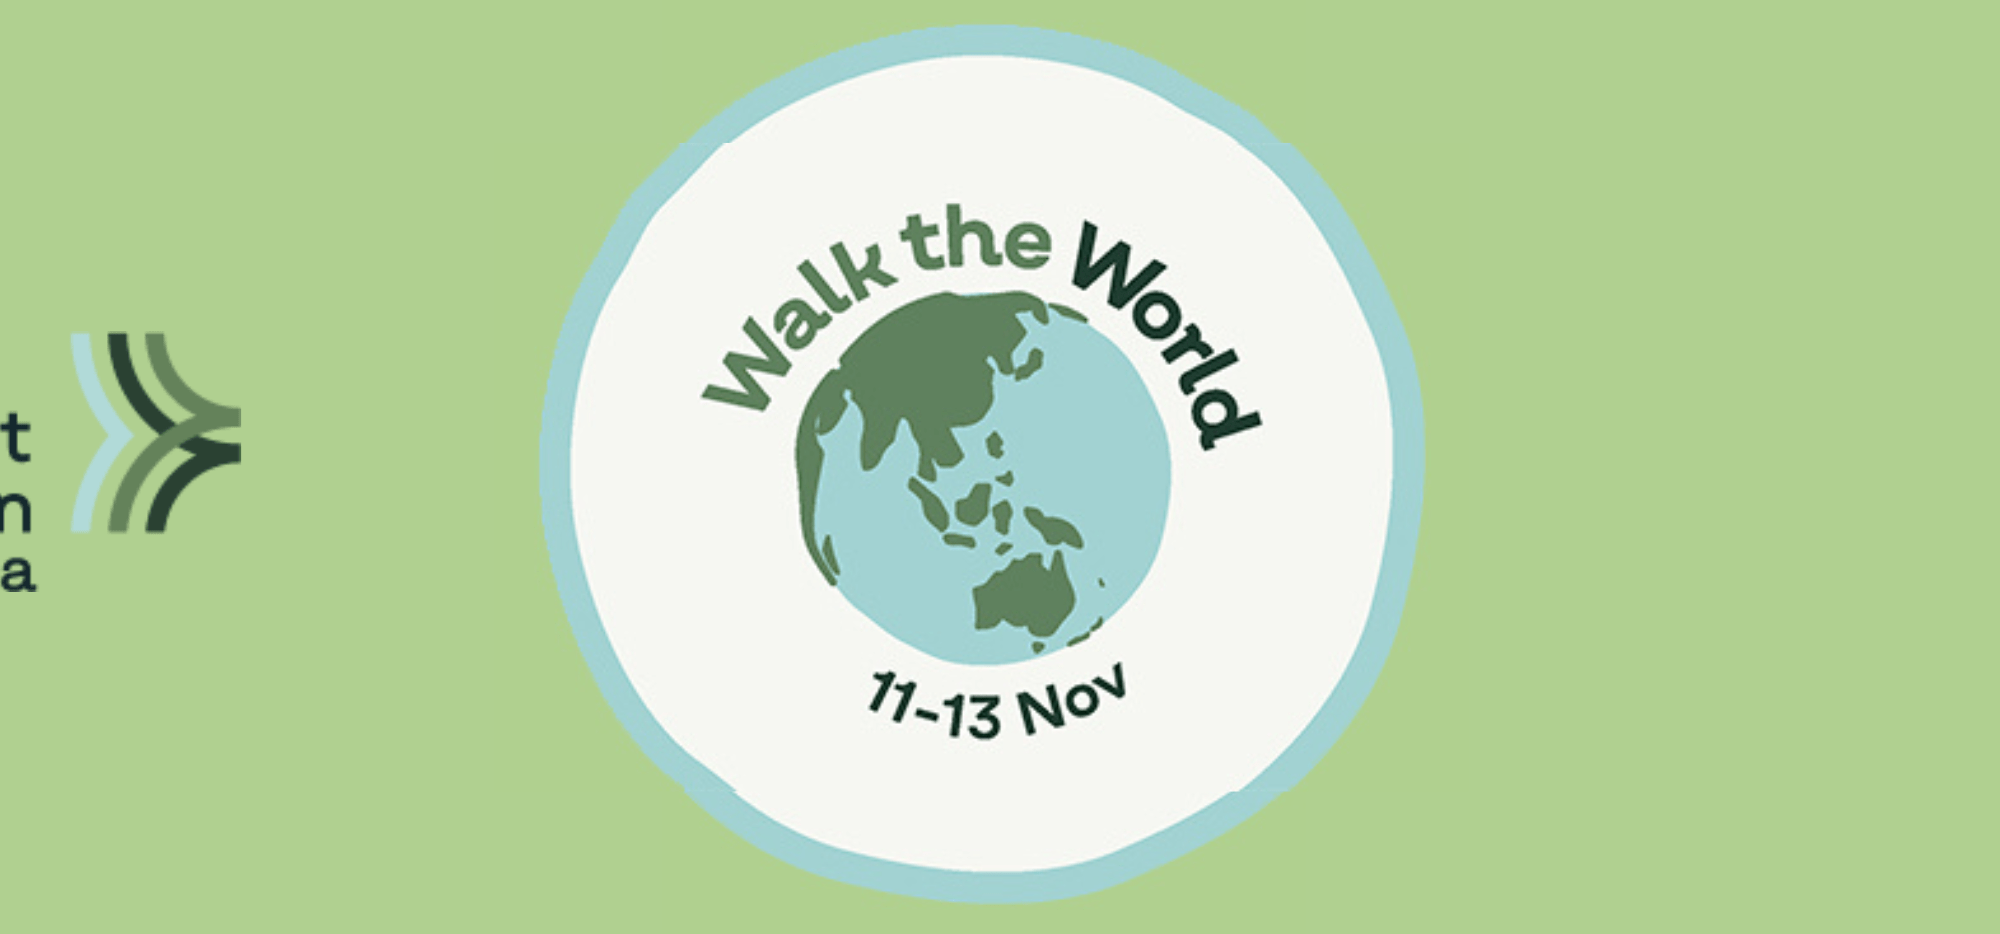 Walk the World = Baptist Mission Australia